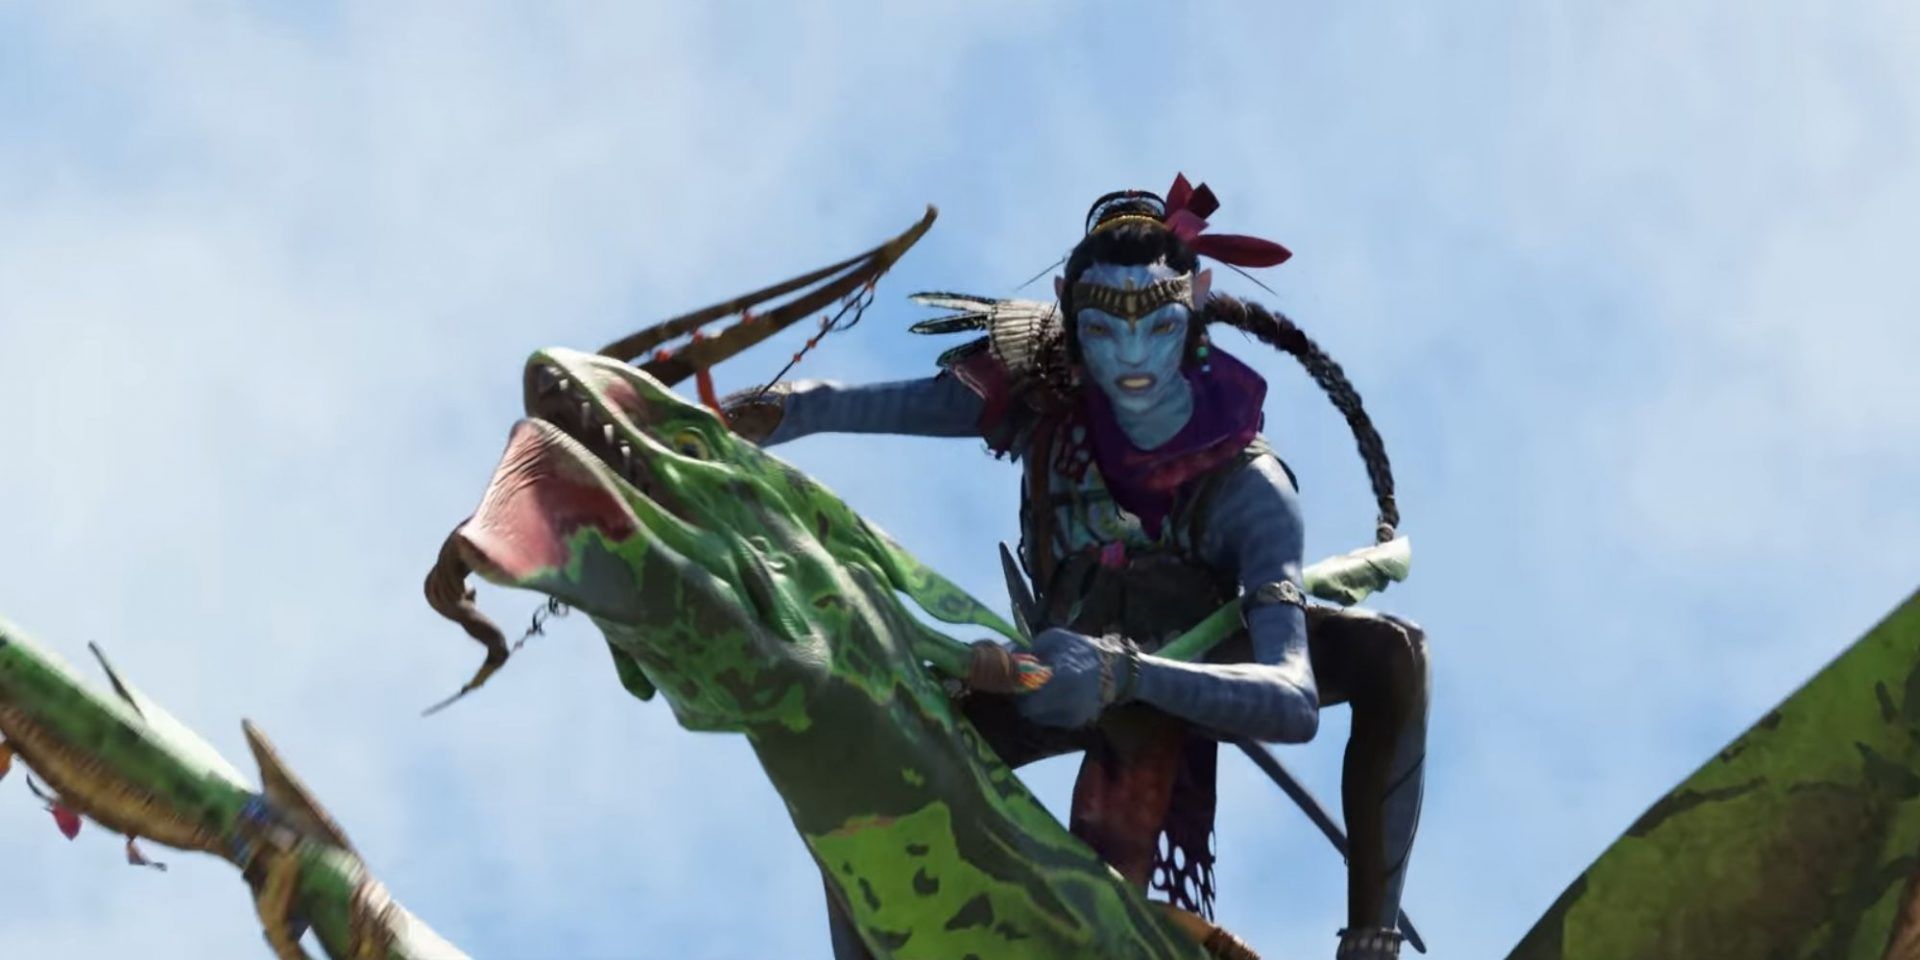 Avatar Frontiers of Pandora Ubisoft Trailer Riding a Dragon